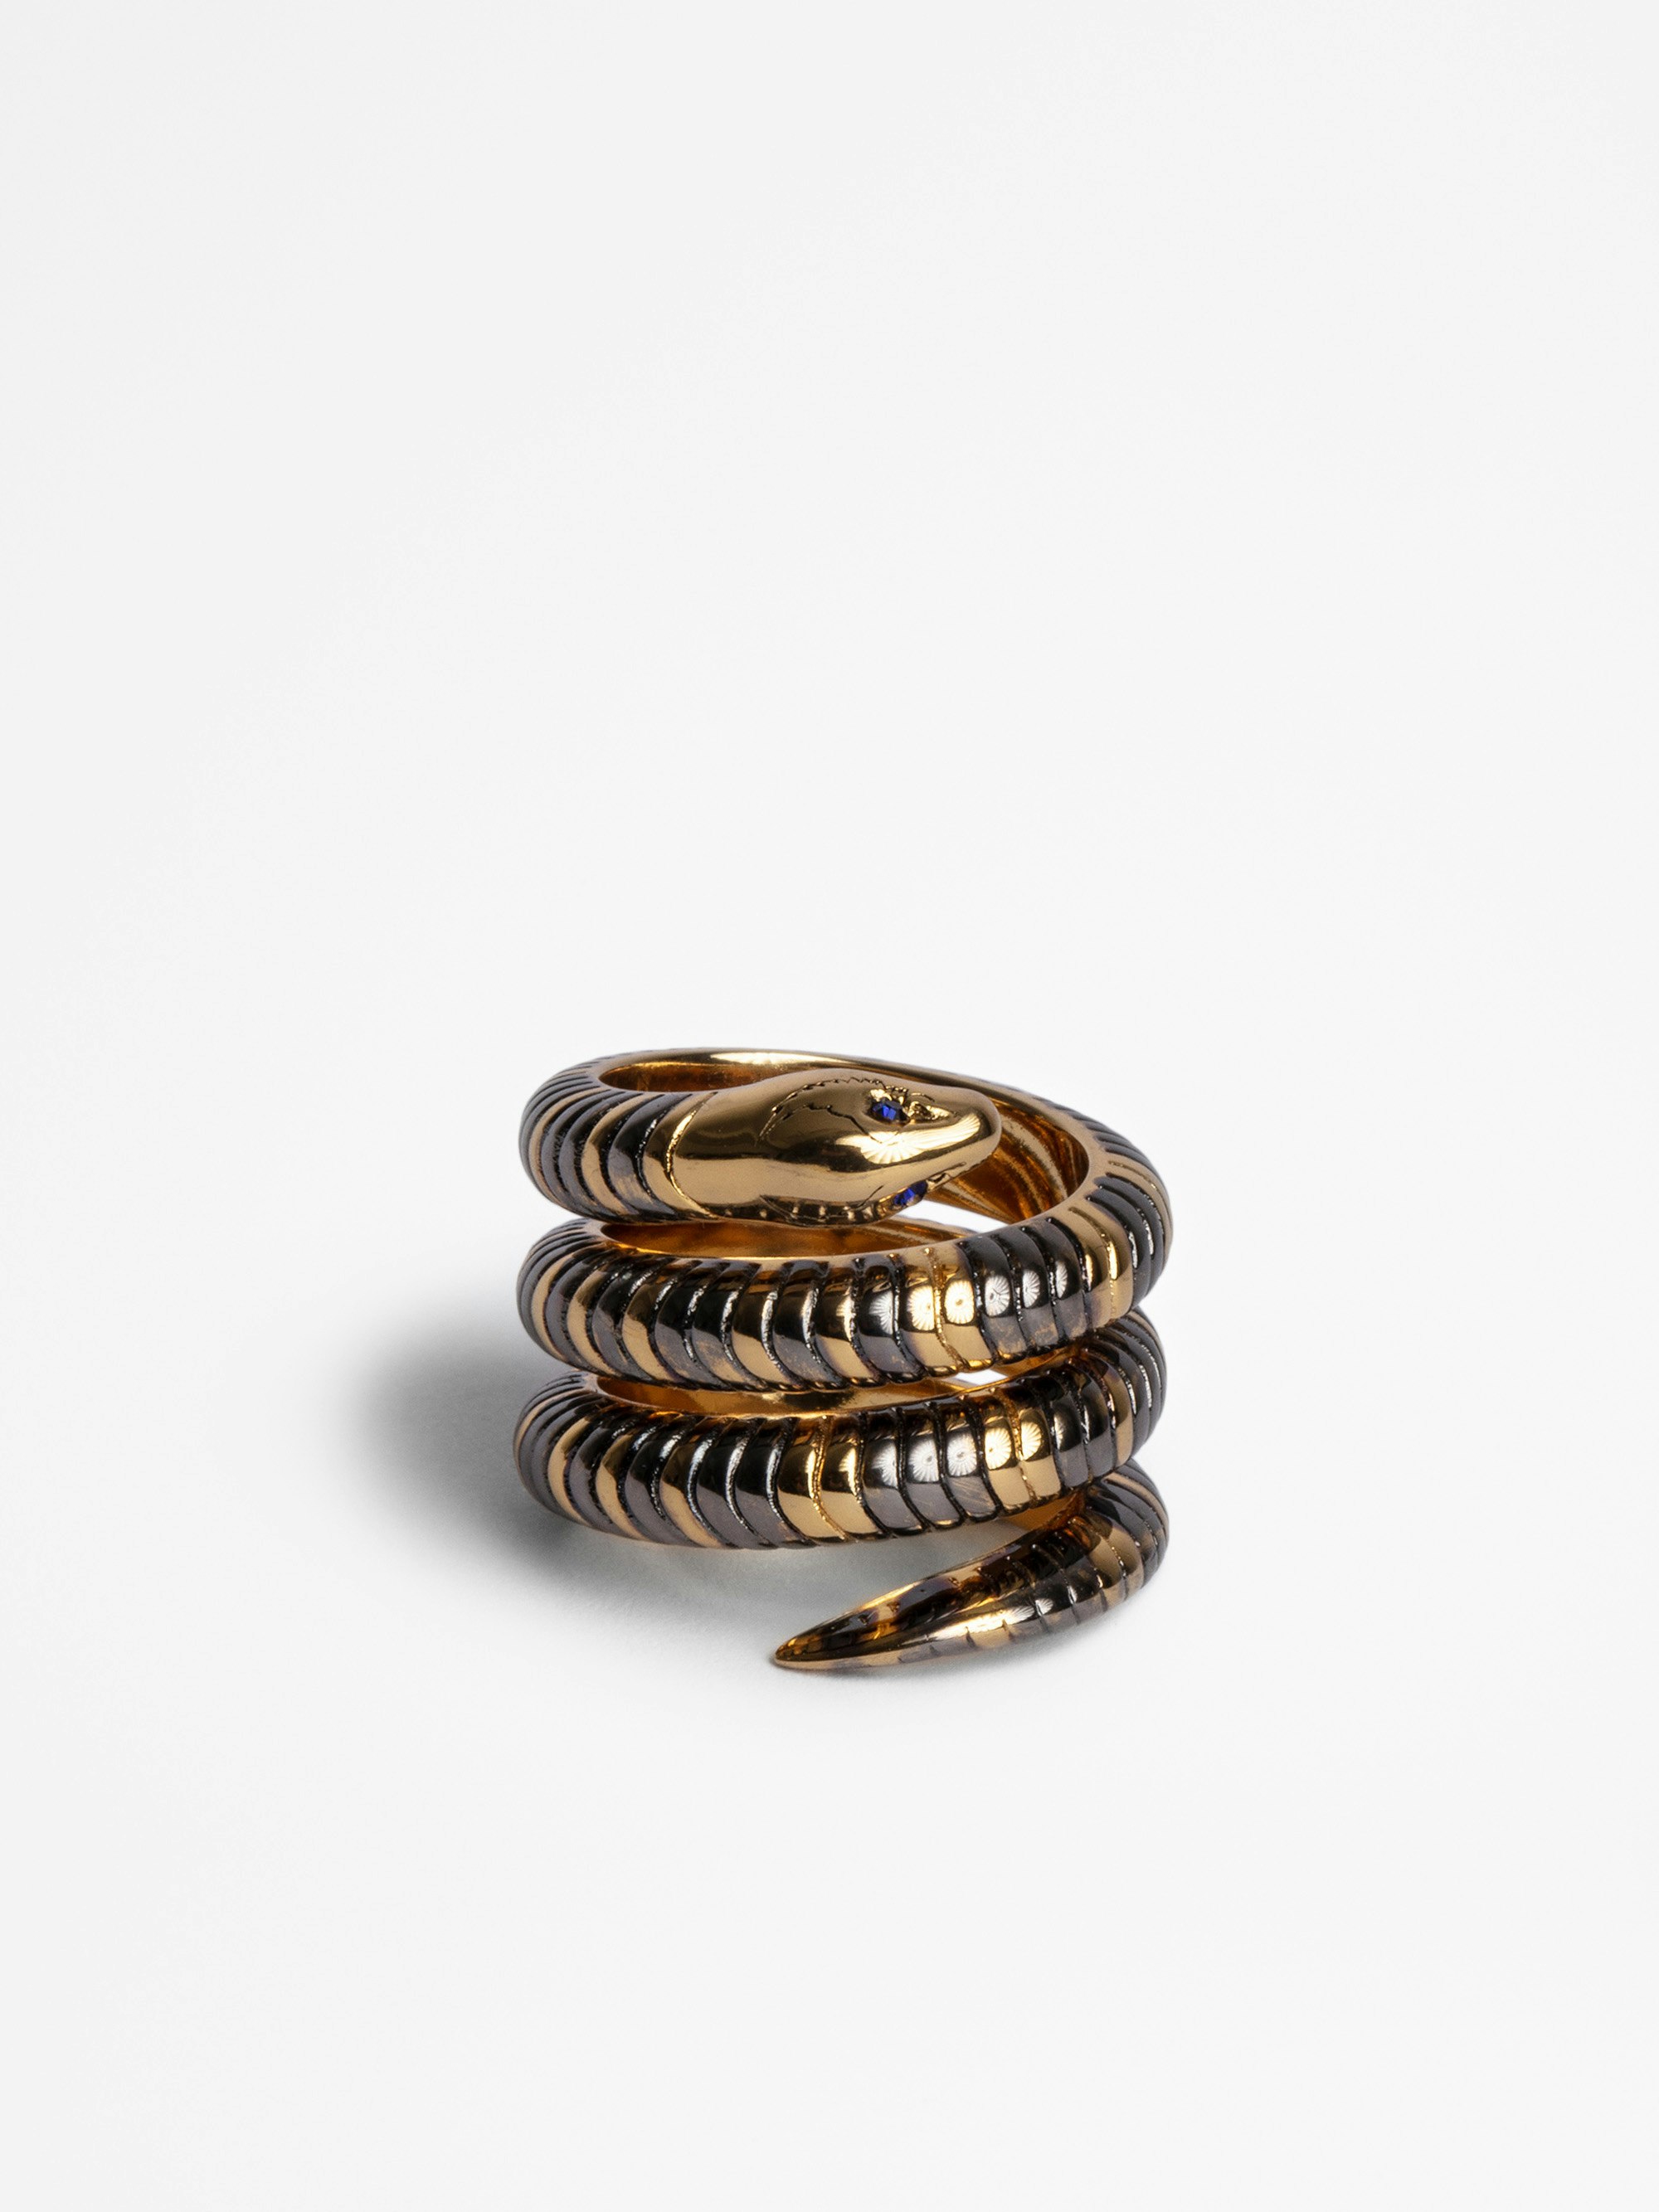 Ring Double Snake - Ring mit Doppel-Schlange aus goldfarbenem Messing.